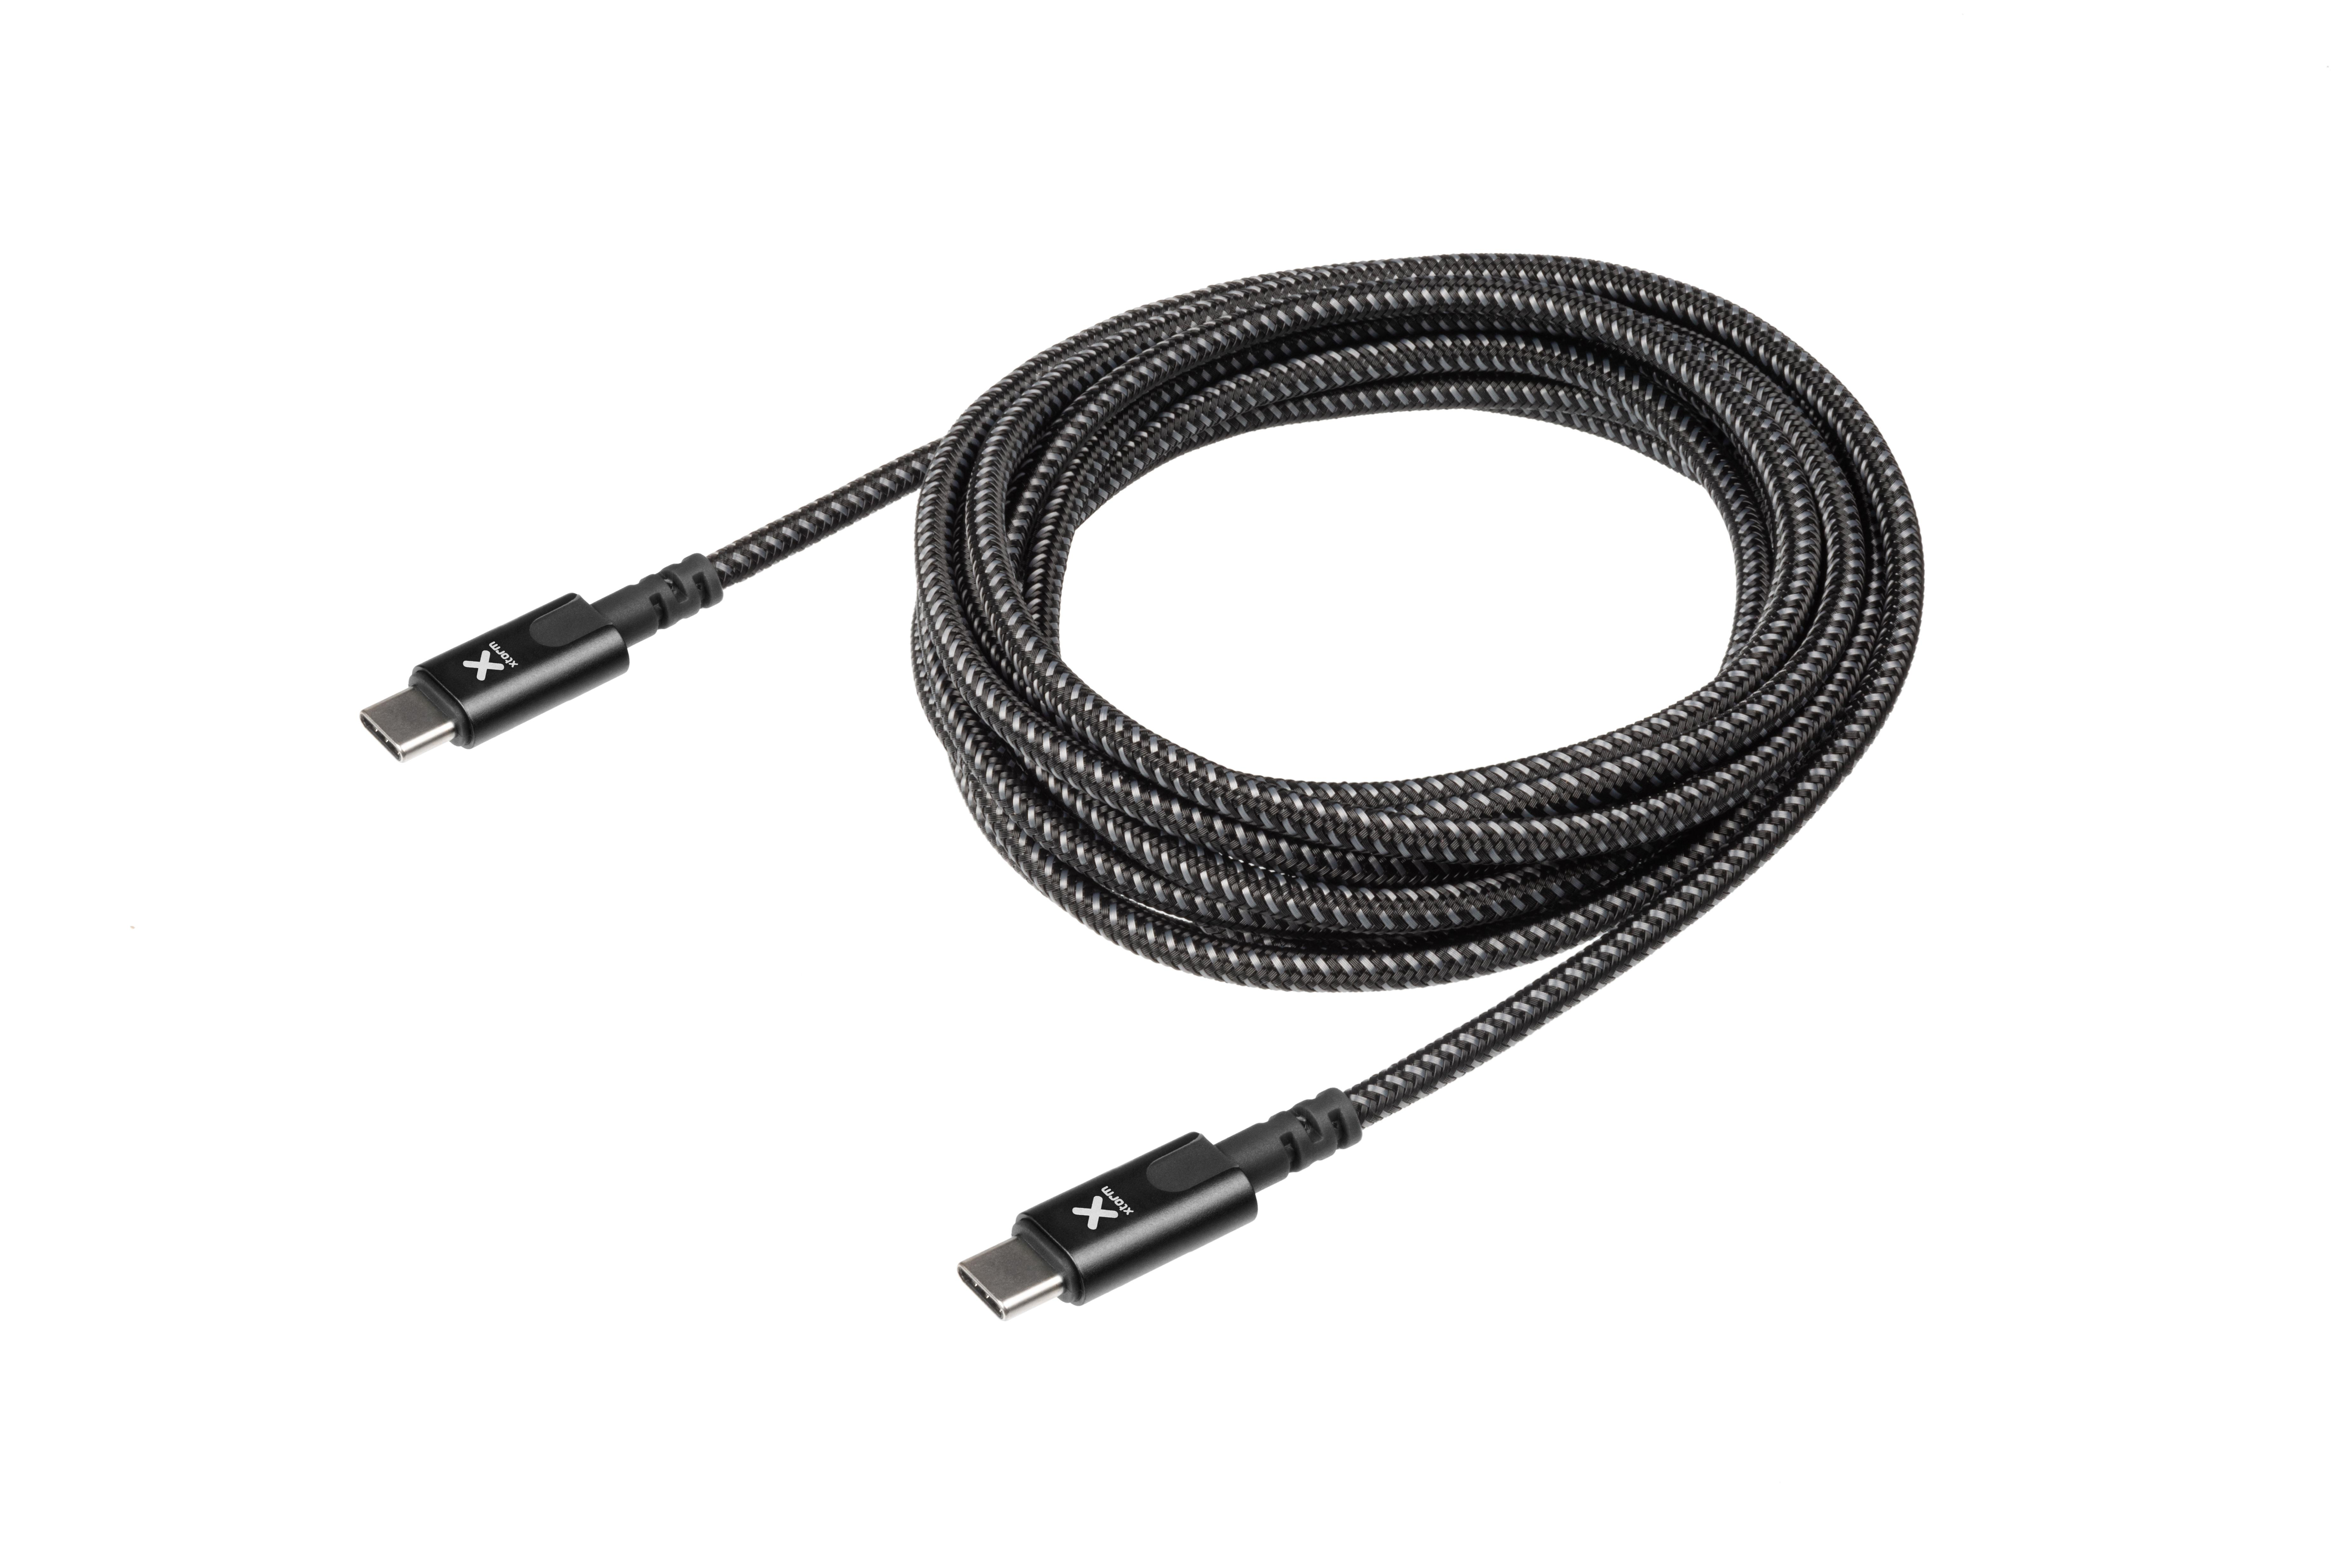 Kabel Original Lightning auf USB XTORM Schwarz USB (1m) Kabel